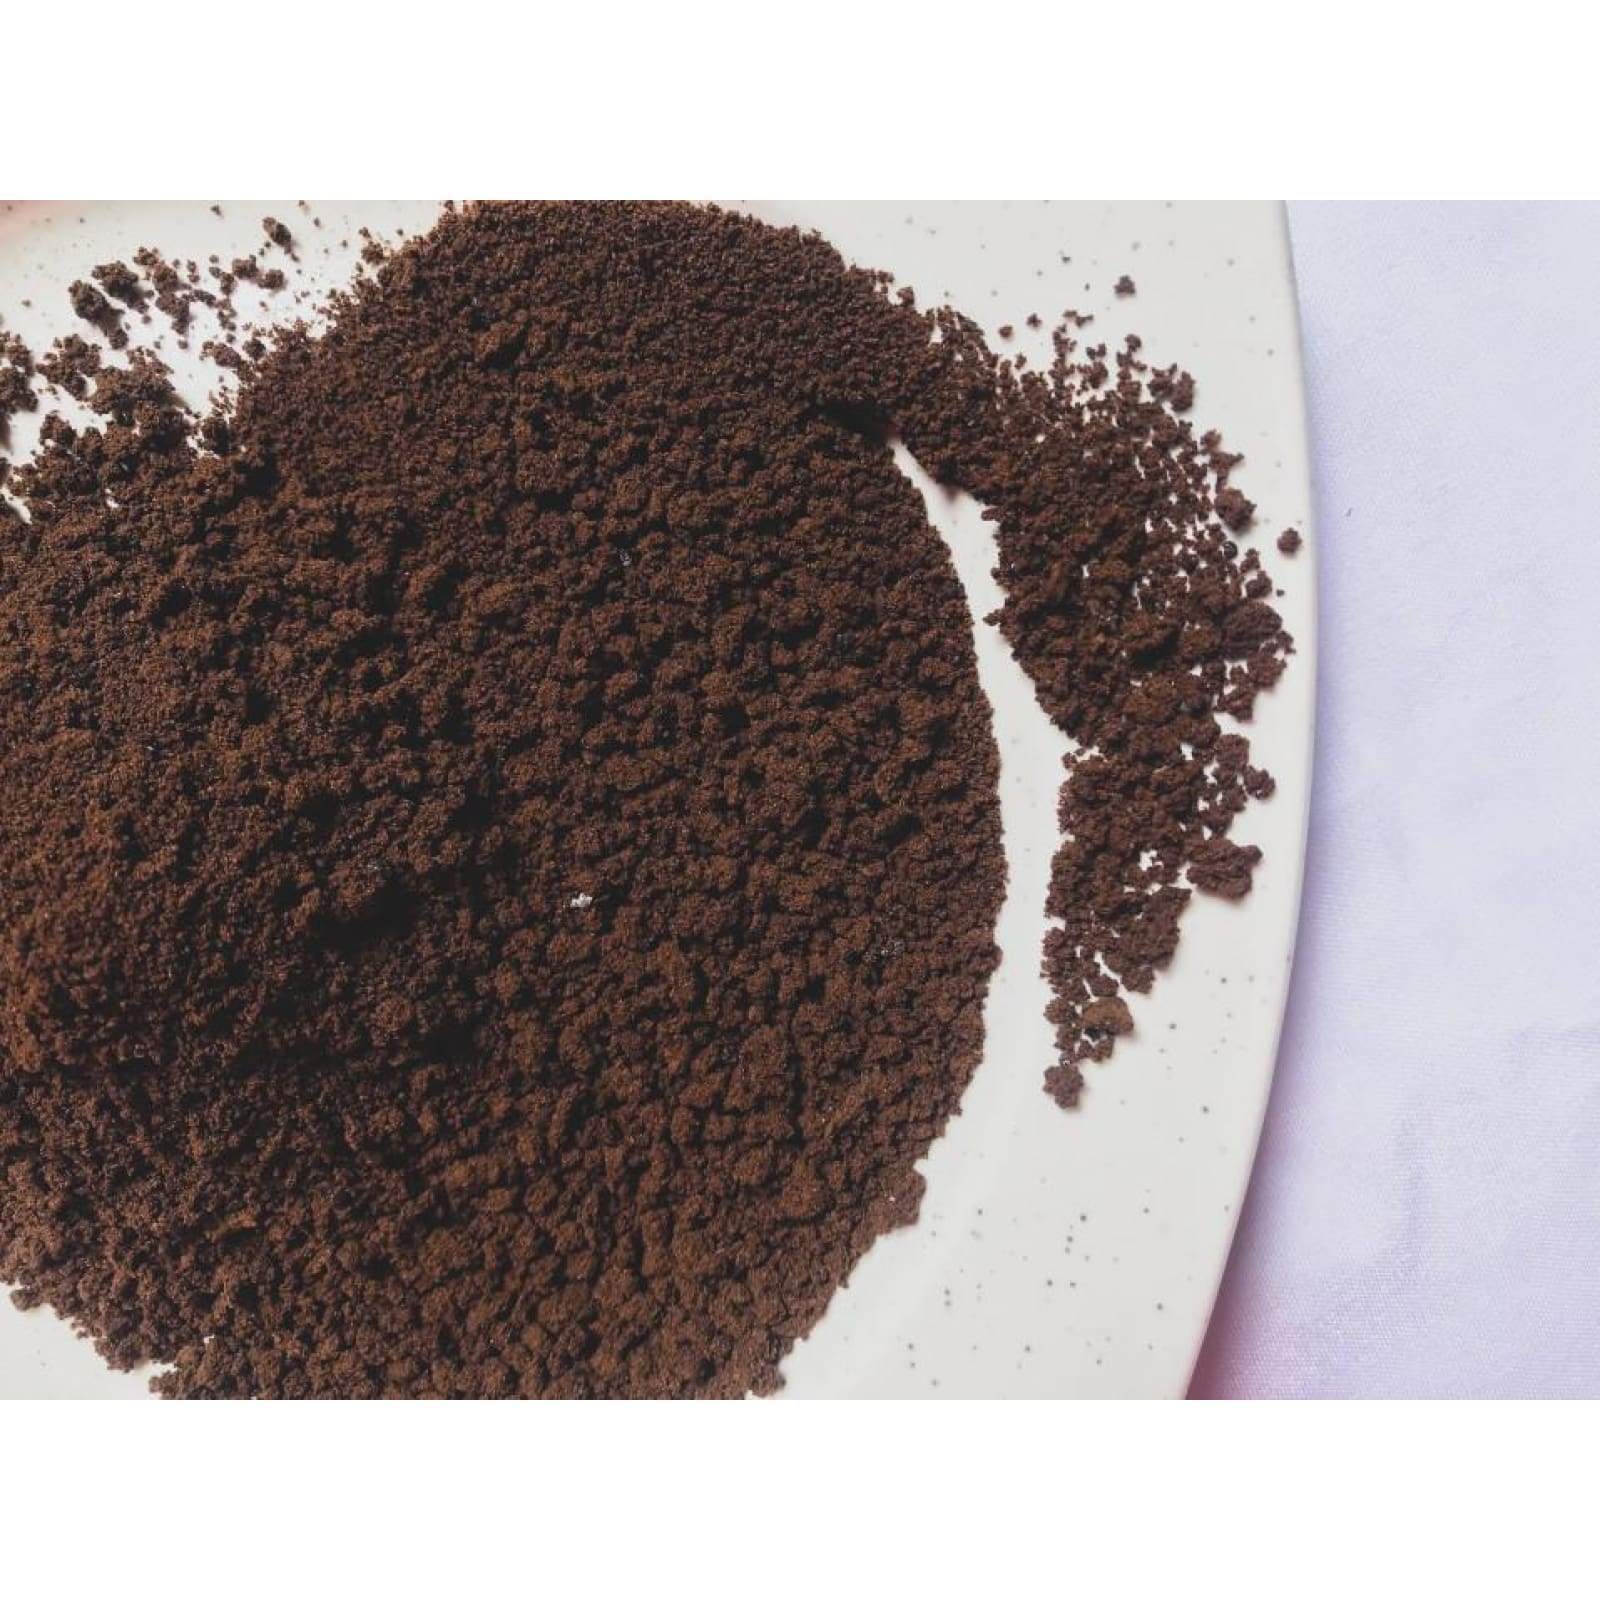 Asian Highlands Blend - 12oz / Premium (Drip) - Coffee - $13.75